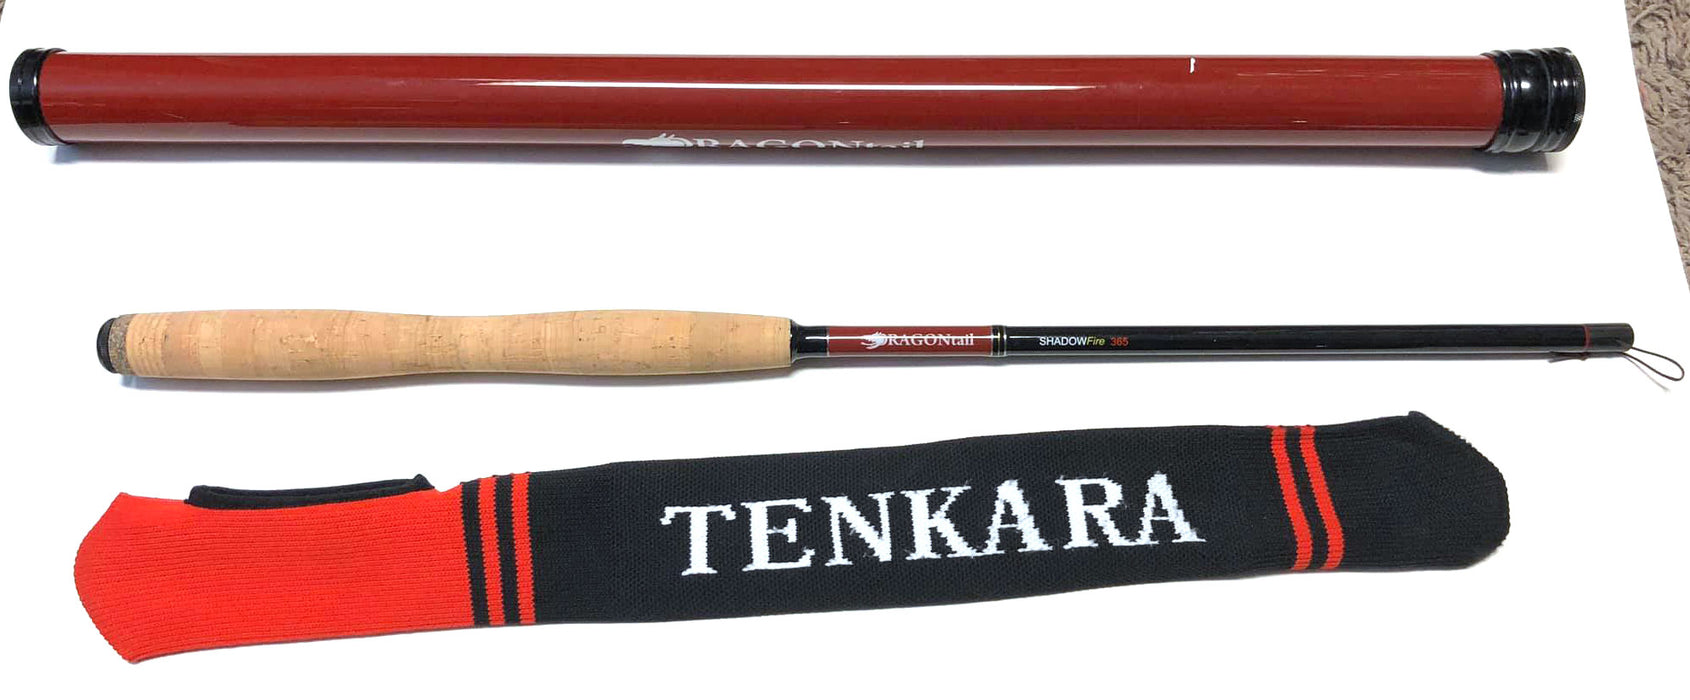 USED Refurbished - Shadowfire 365 Tenkara Rod with Hard Case & Sock